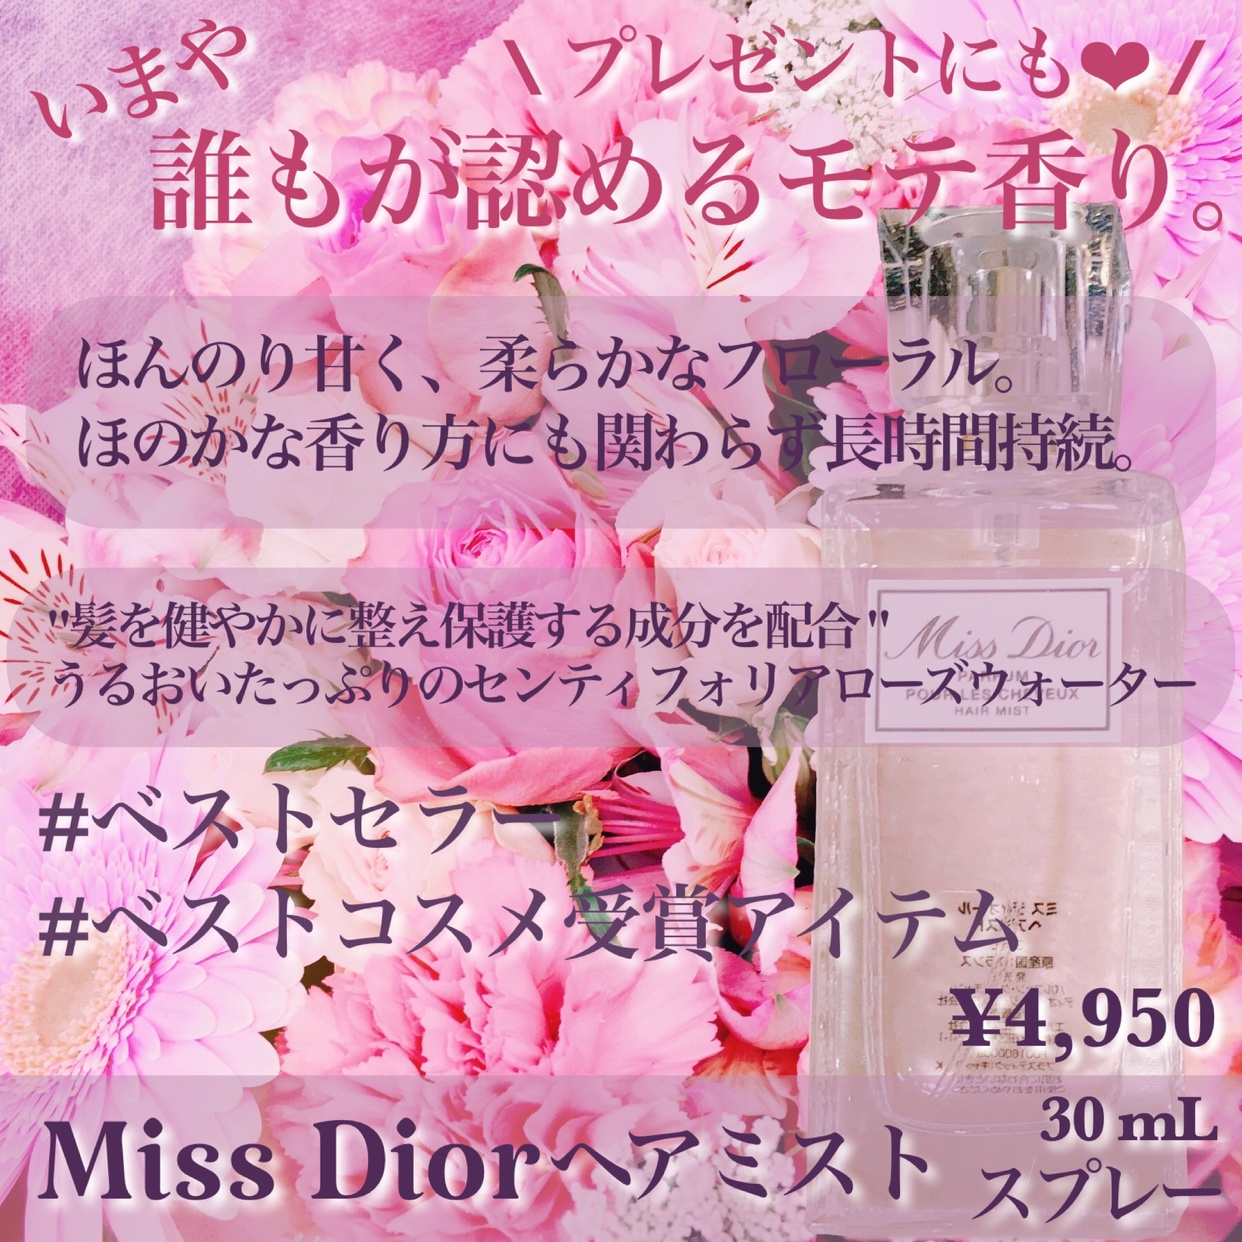 Dior(ディオール) ミス ディオール ヘアミストを使ったsatomiさんのクチコミ画像2